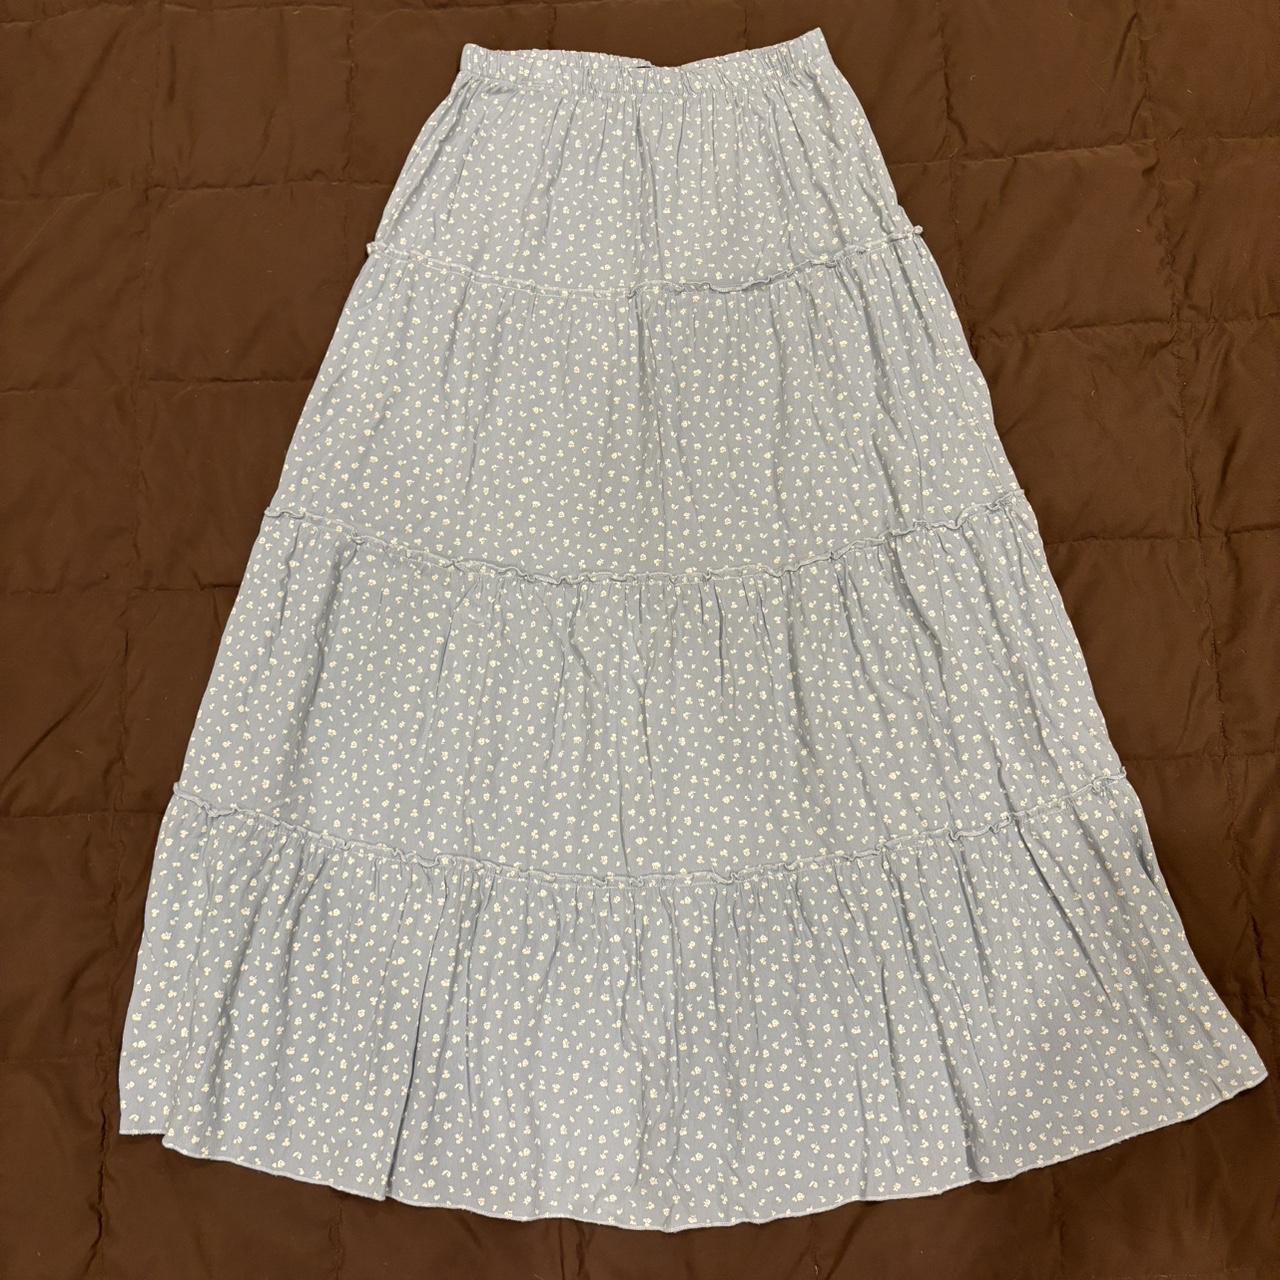 Brandy Melville Izzy skirt - one size - light blue... - Depop